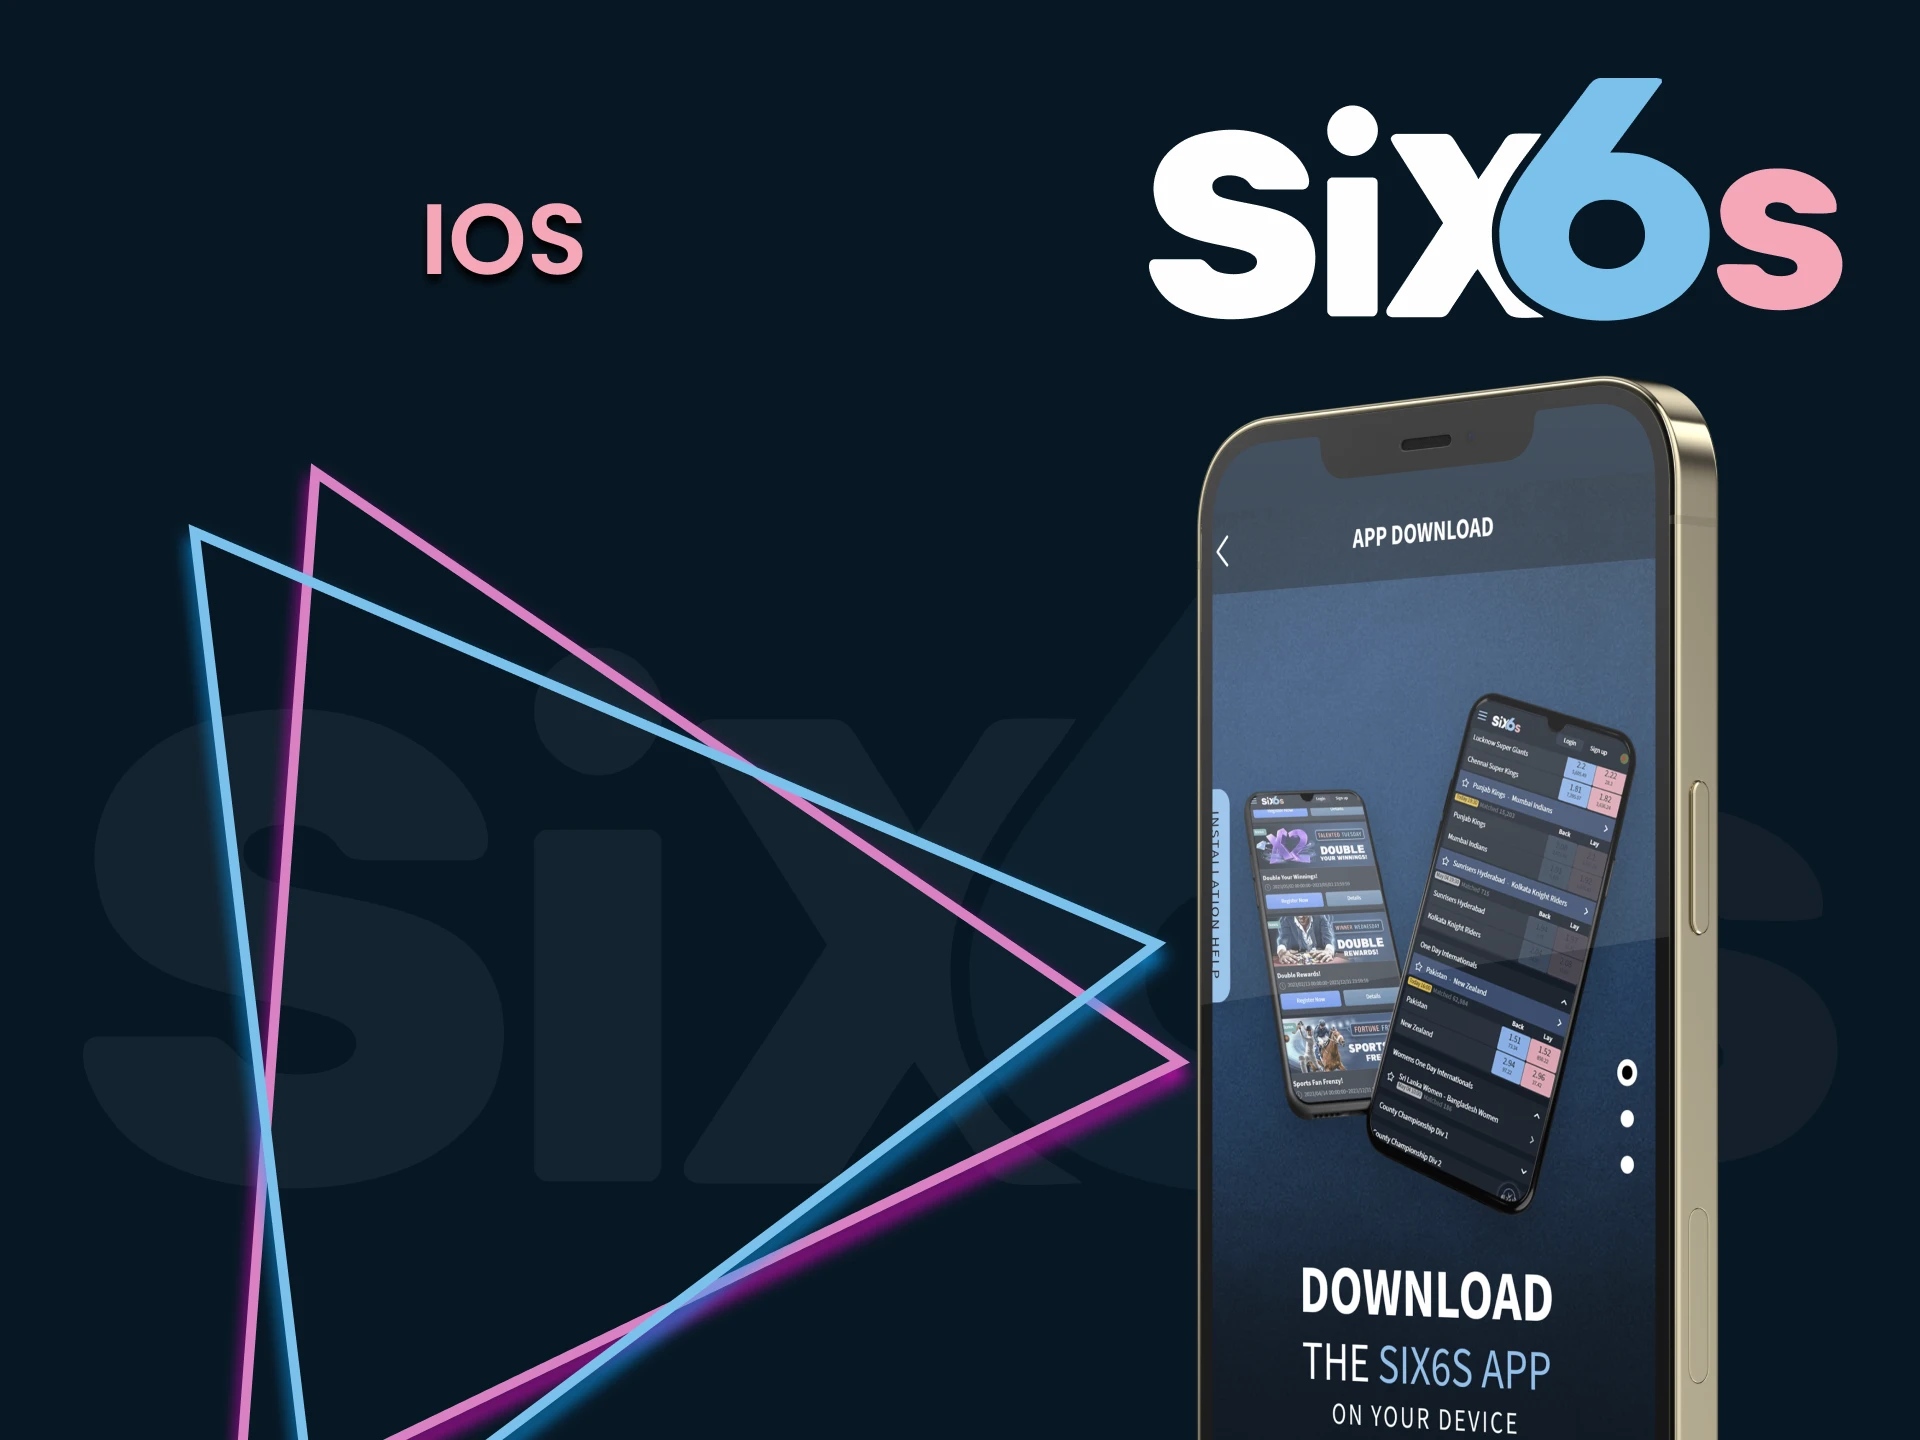 Install the Six6s app for iOS.